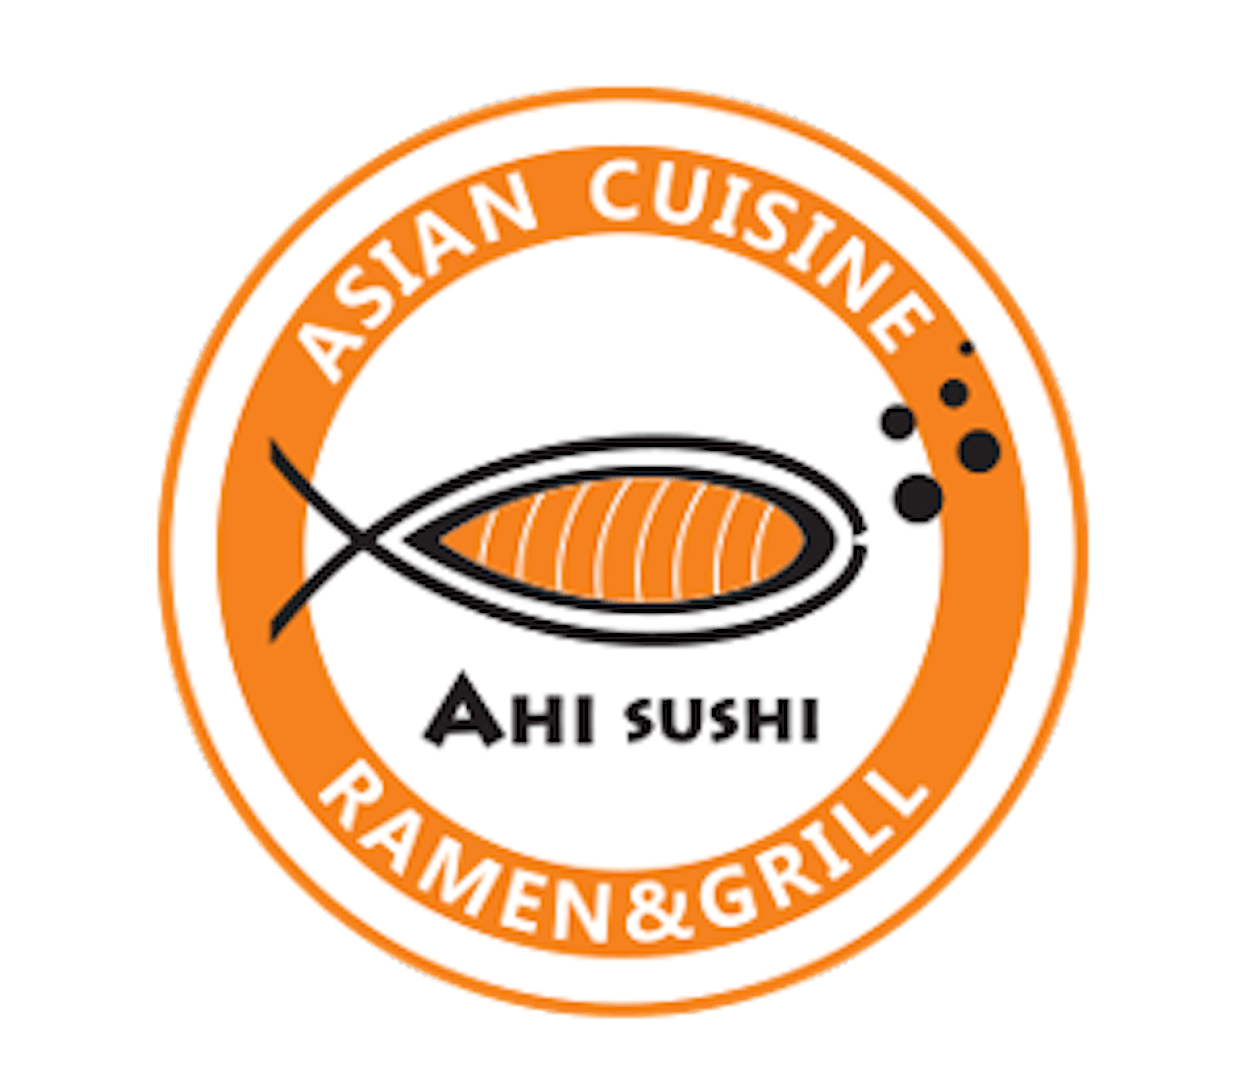 Ahi Sushi Ramen Grill Omaha Ne 68144 Menu Order Online